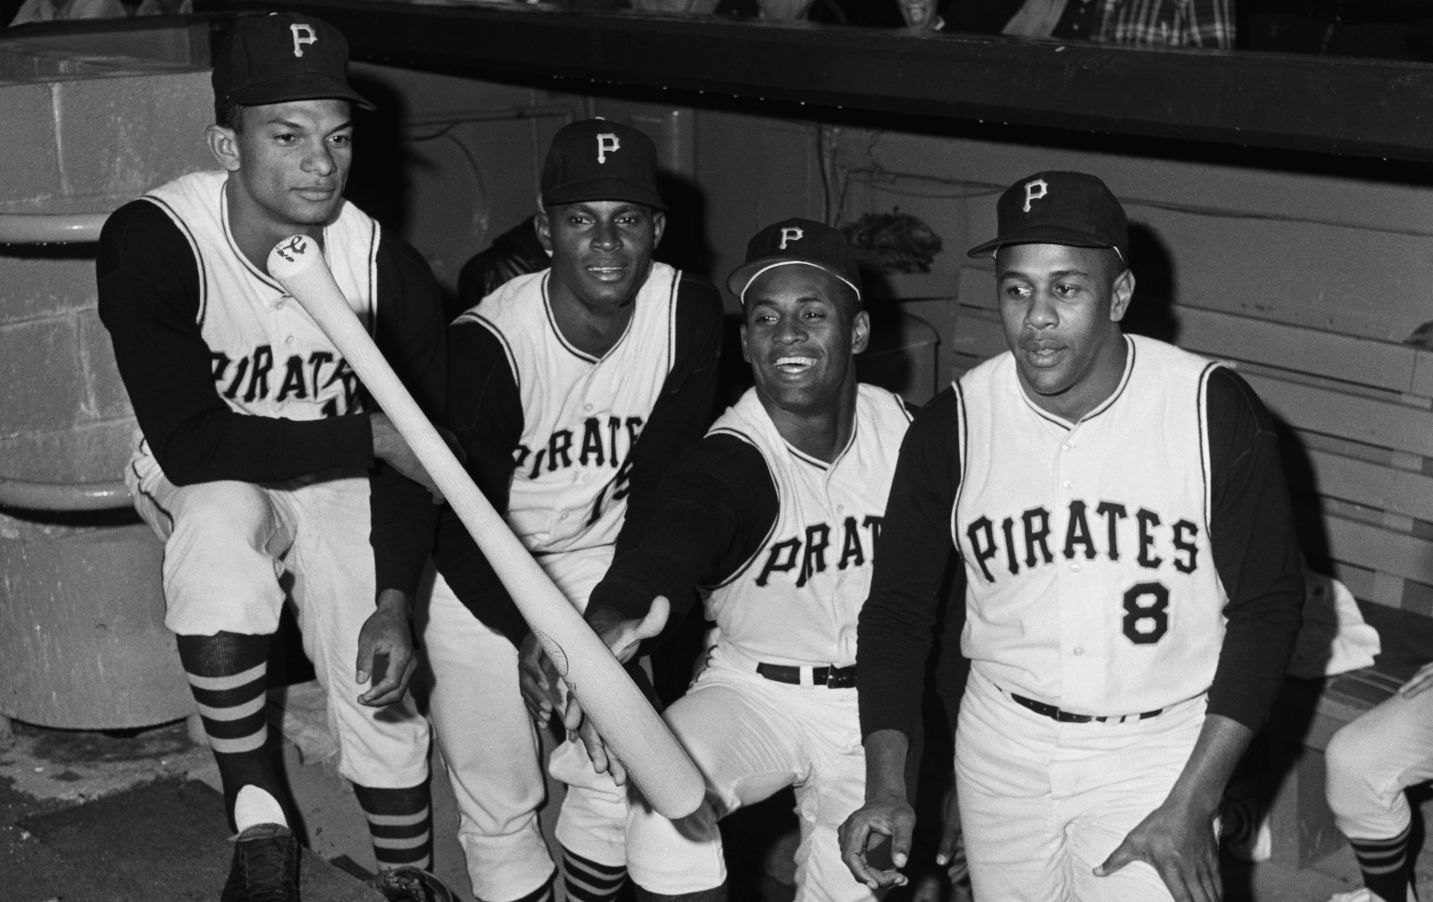 pirates baseball uniform history